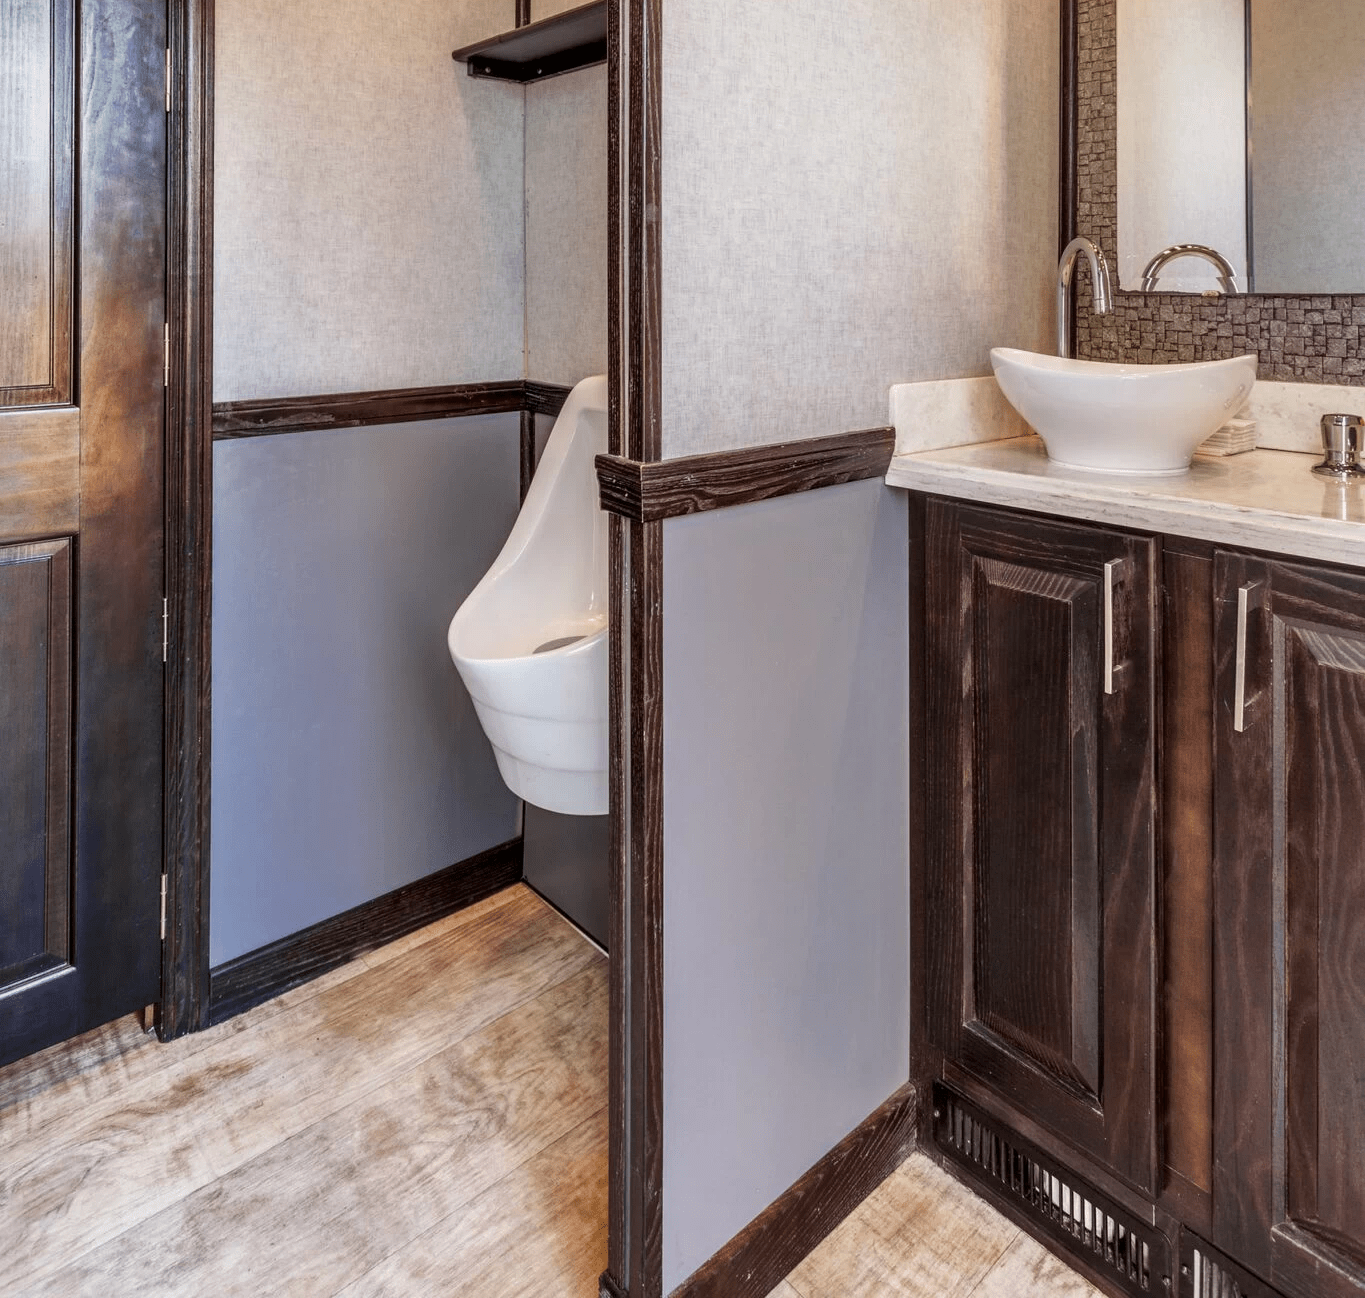 Inside a luxury restroom trailer Bridgeport, CT